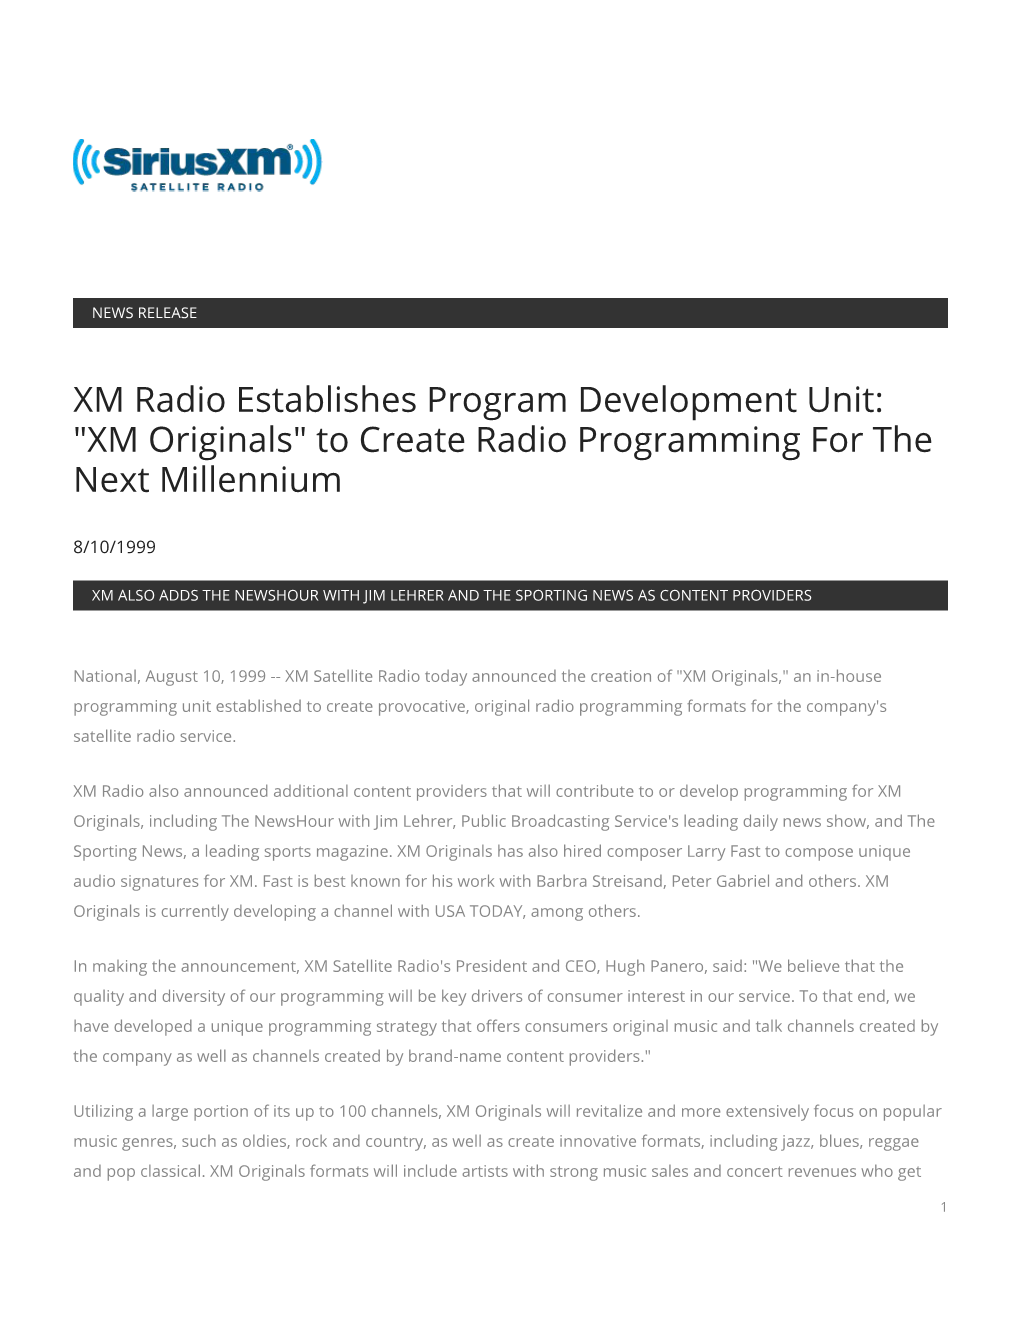 XM Radio Establishes Program Development Unit: "XM Originals" to Create Radio Programming for the Next Millennium